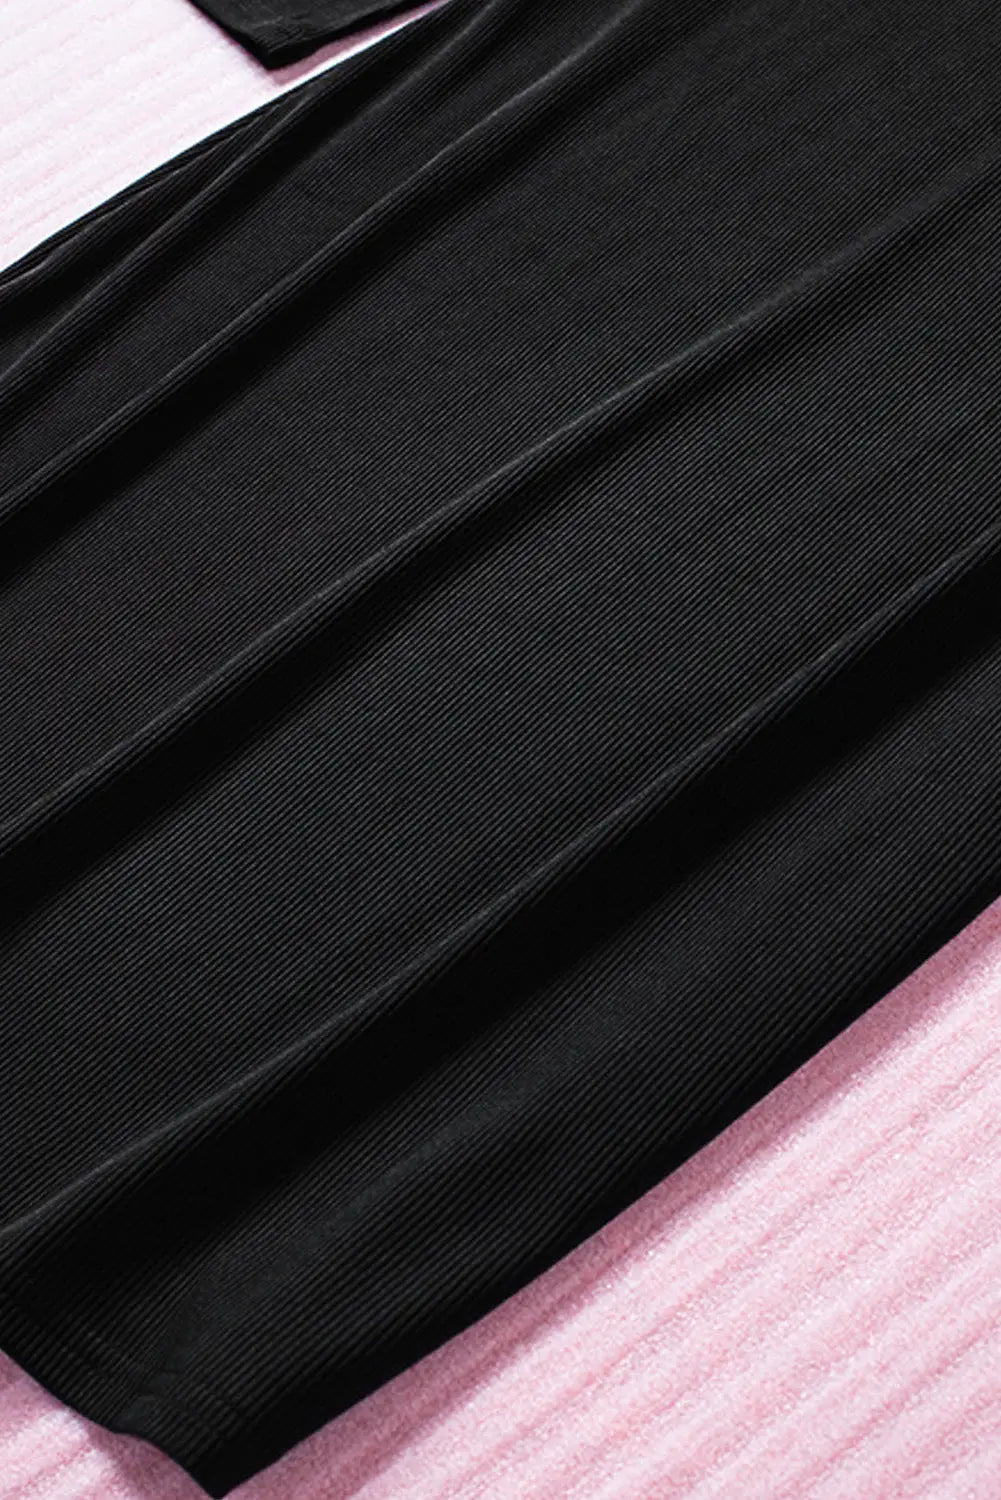 Black cut-out long sleeve bodycon mini dress - dresses